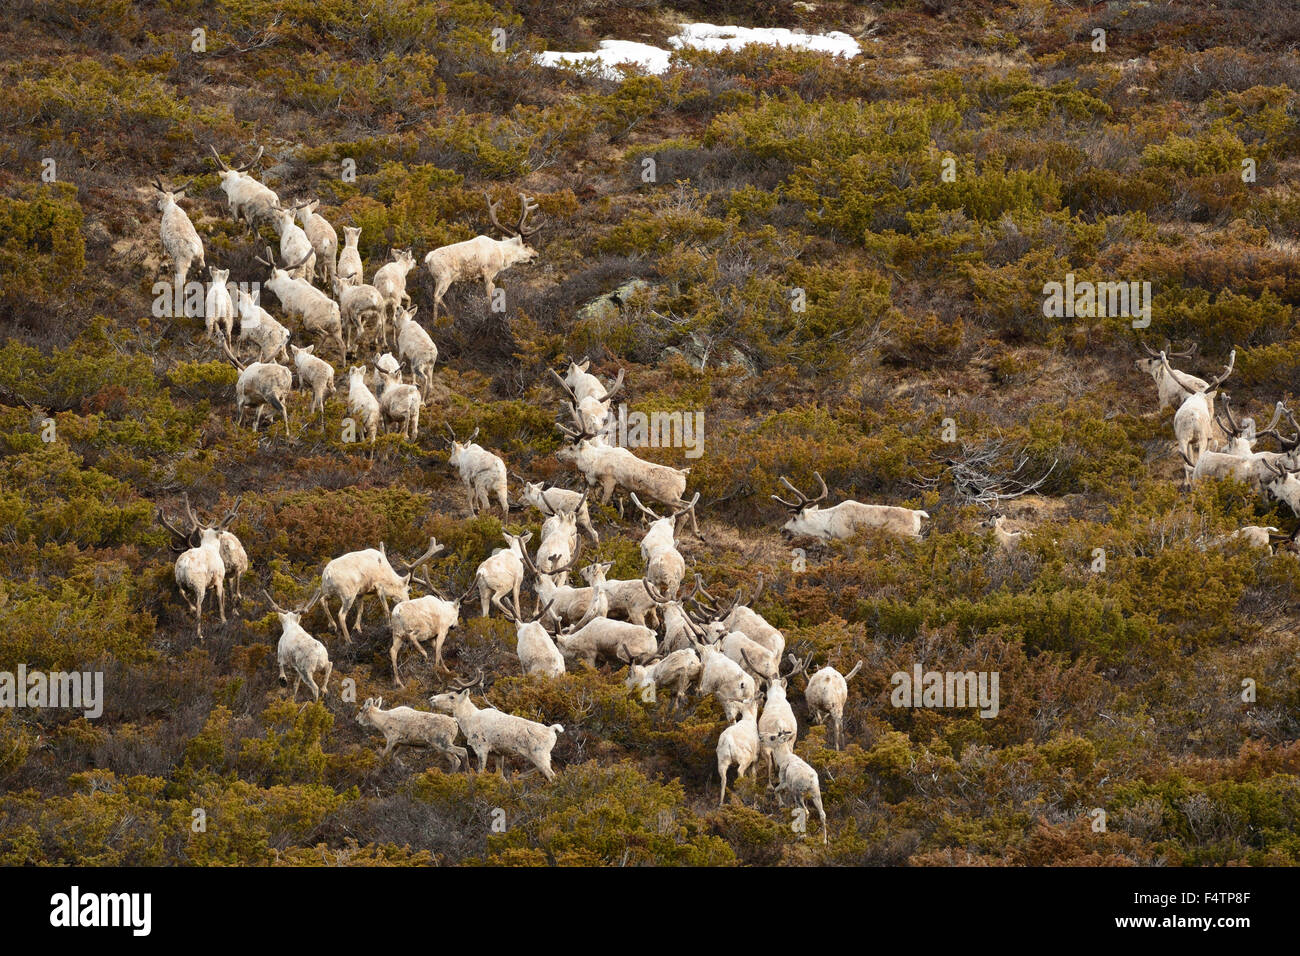 Reindeer, Rangifer tarandus, Cervidae, wild variety, flock, mammal, animal, Einunndalen, Folldal, Hedmark, Norway Stock Photo